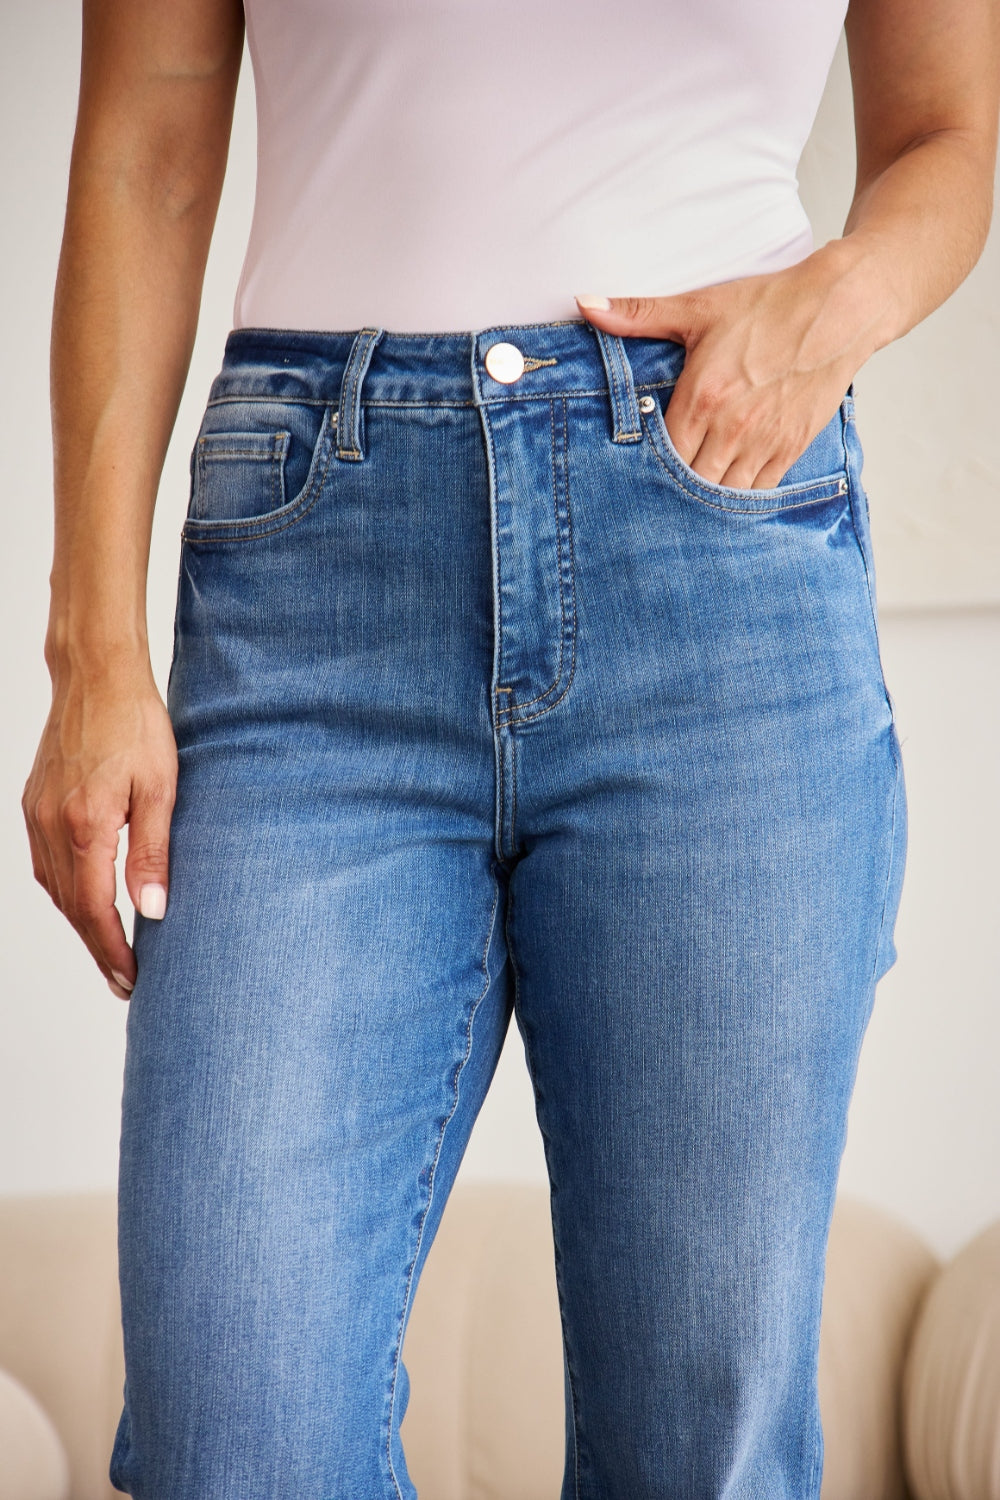 RFM Mini Mia Full Size Tummy Control High Waist Jeans-Jeans-Krush Kandy, Women's Online Fashion Boutique Located in Phoenix, Arizona (Scottsdale Area)